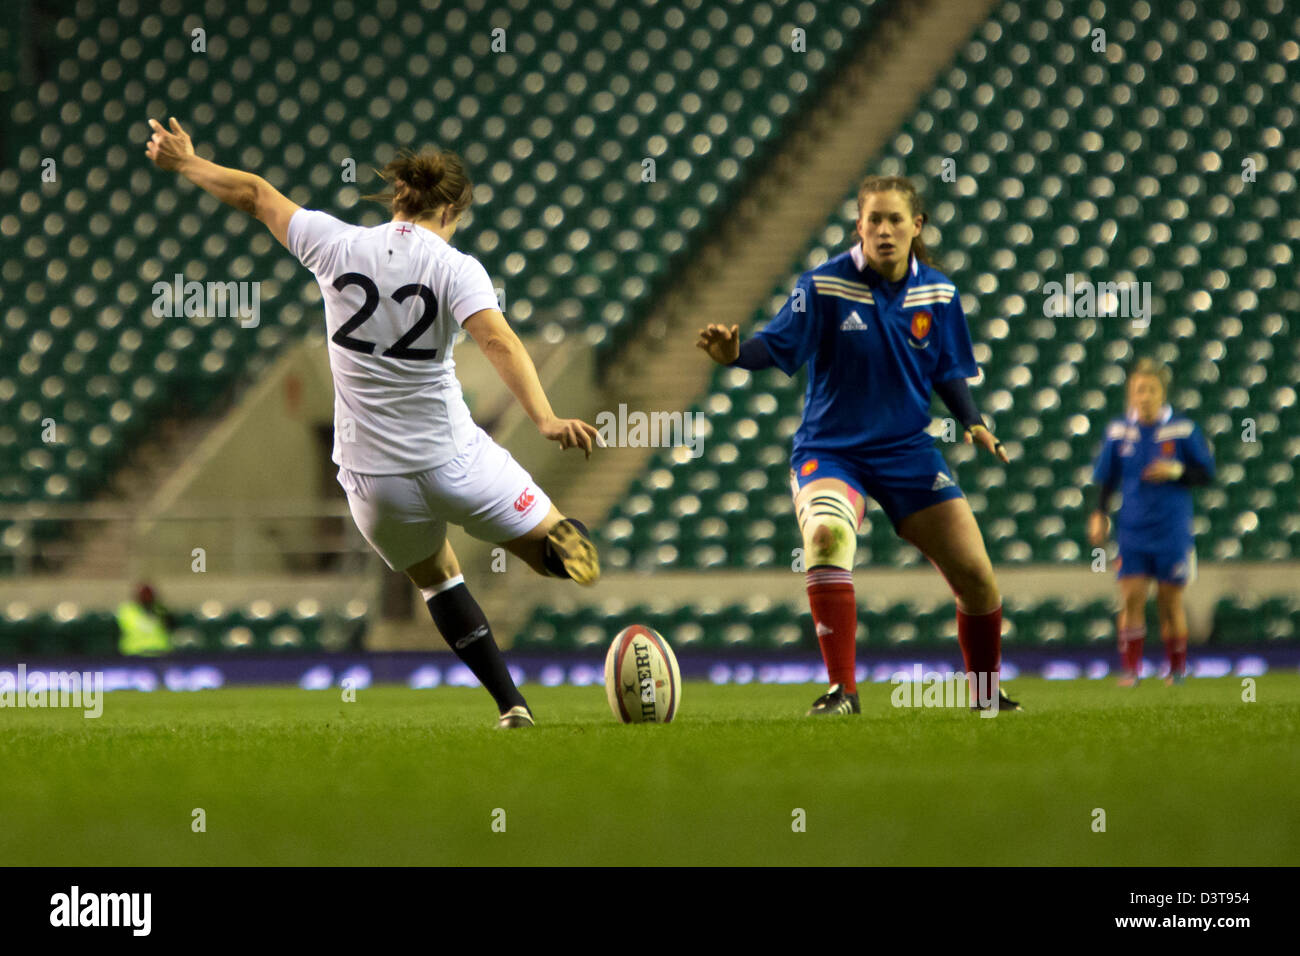 Katy McLean (Fra) Kicking the ball rencontrés par Lucille Godiveau (Fra), 23.02.2013, London, England v France Women's Rugby Six Nations. Banque D'Images